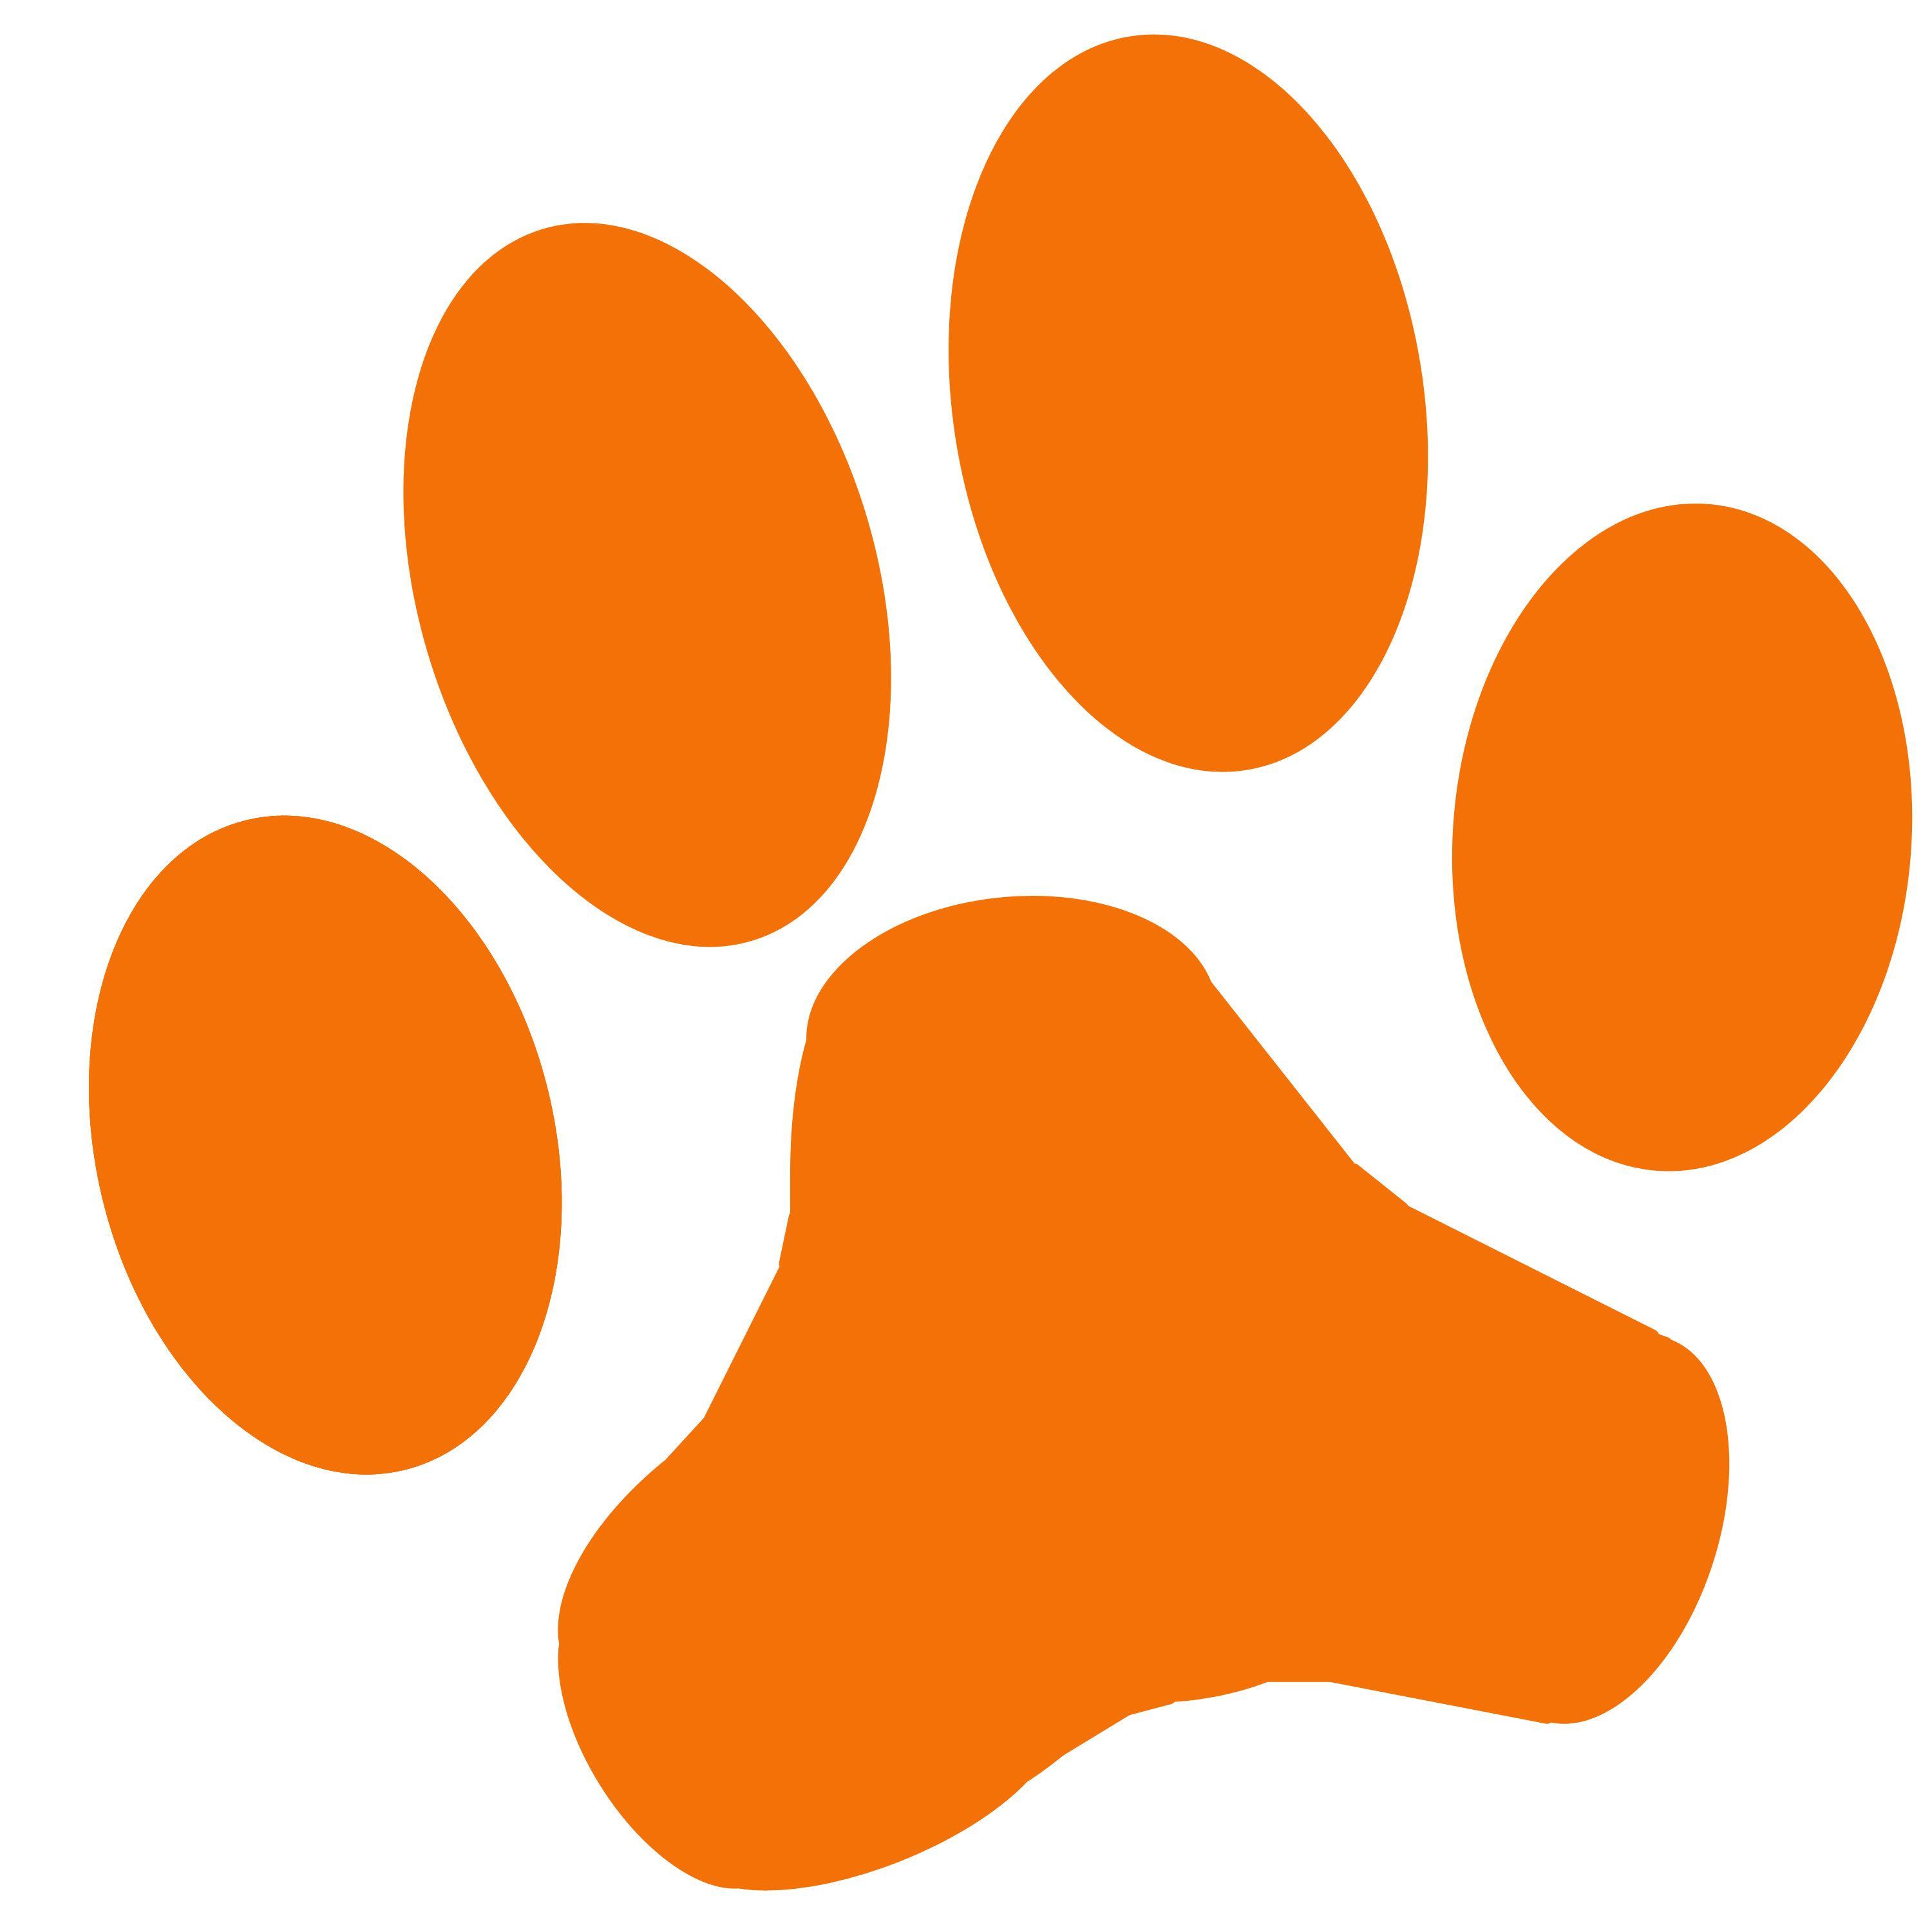 Orange O Paw Logo - Free Picture Of Paw Print, Download Free Clip Art, Free Clip Art